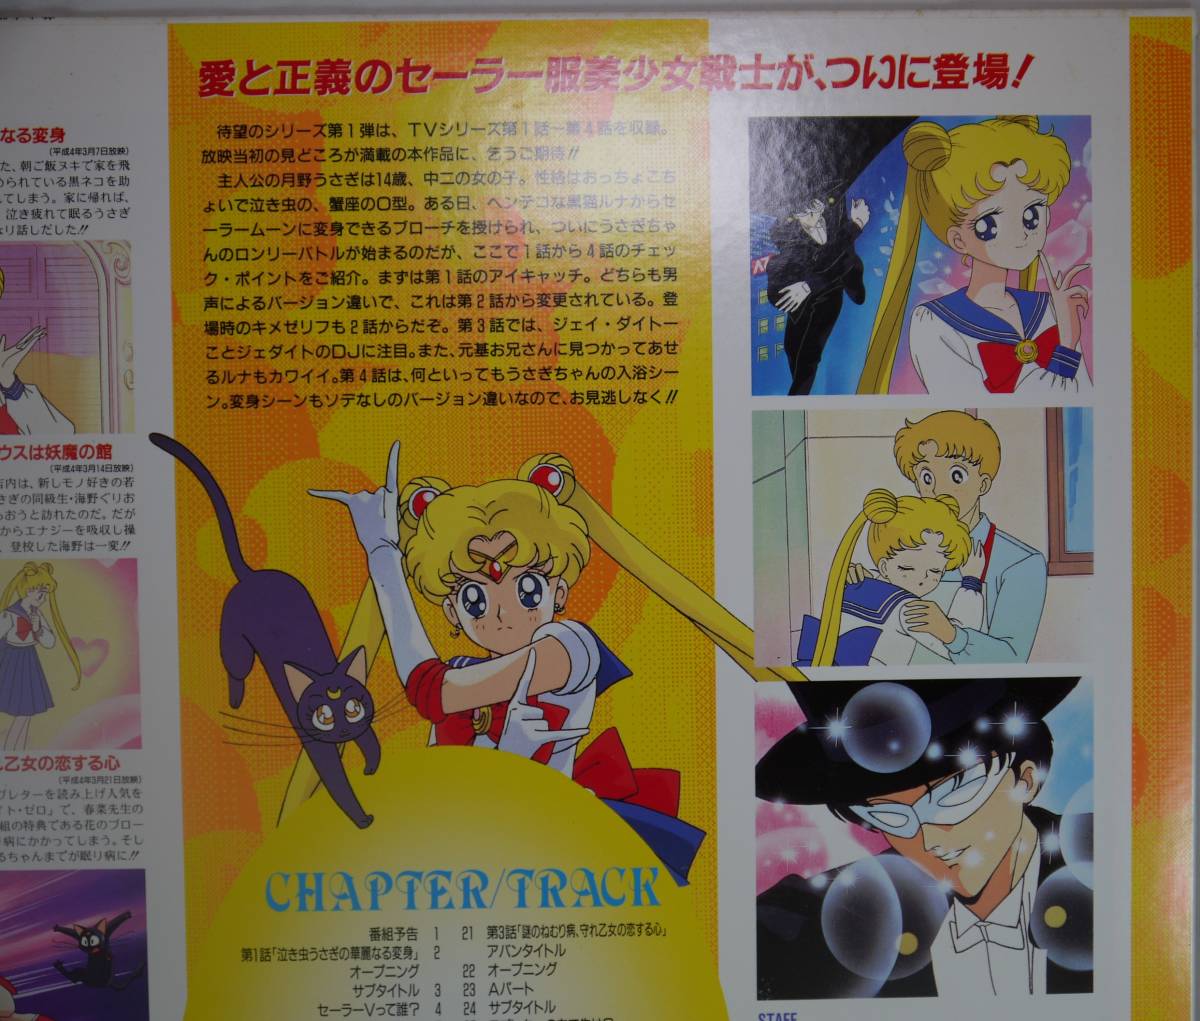  Pretty Soldier Sailor Moon LASER DISC LD laser disk TOEI higashi .vol1 month ..........!